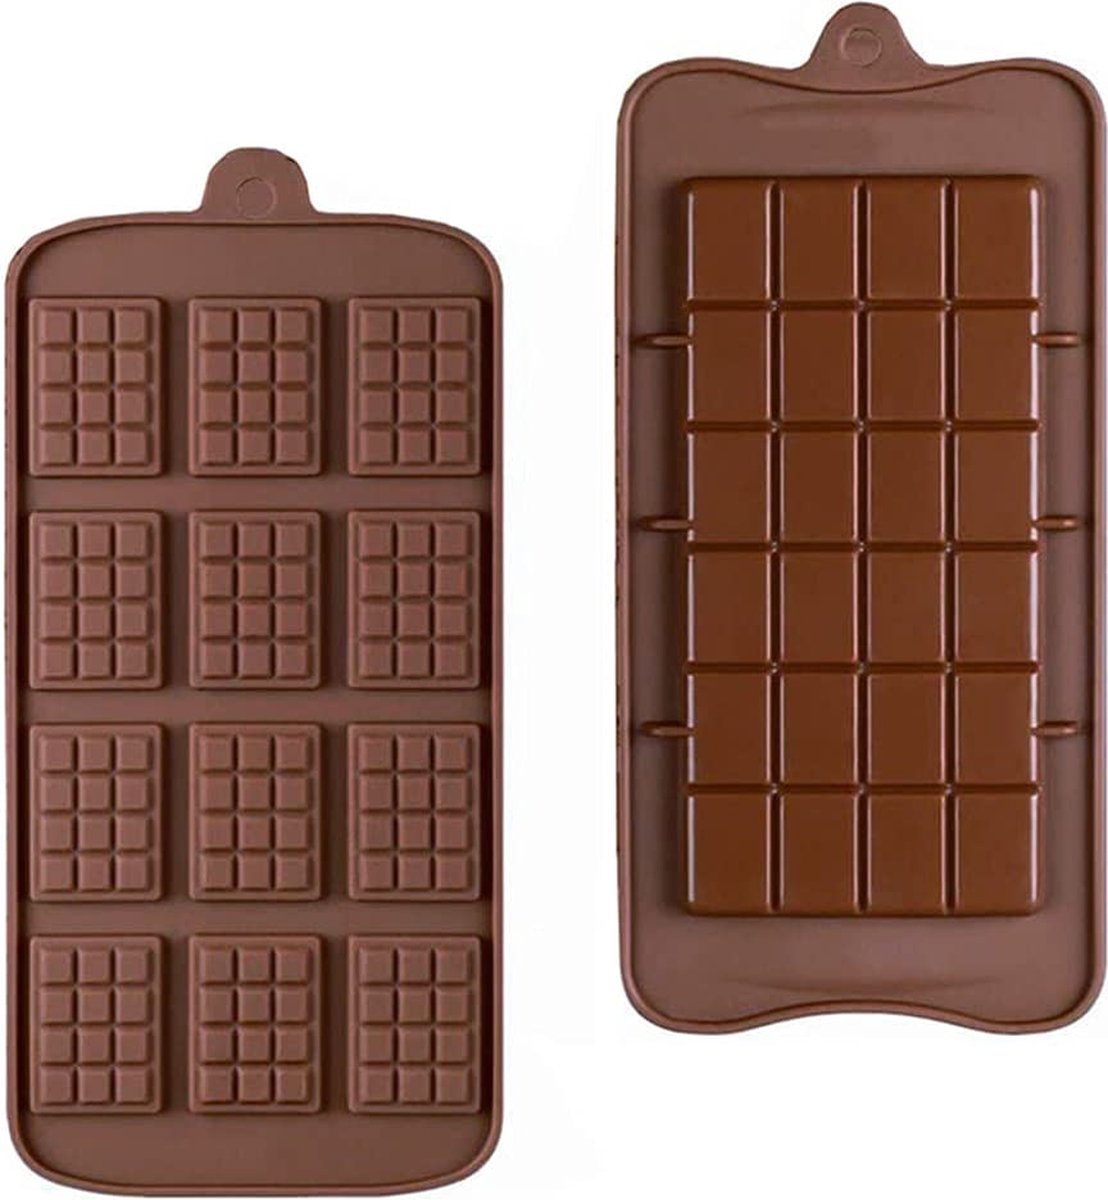 2 Stuks - Siliconen Chocolade Mal - Chocolade Reep Vorm - Snoep Mal - Chocolade Reep Vorm - Siliconen - 2 Ontwerpen - Bruin